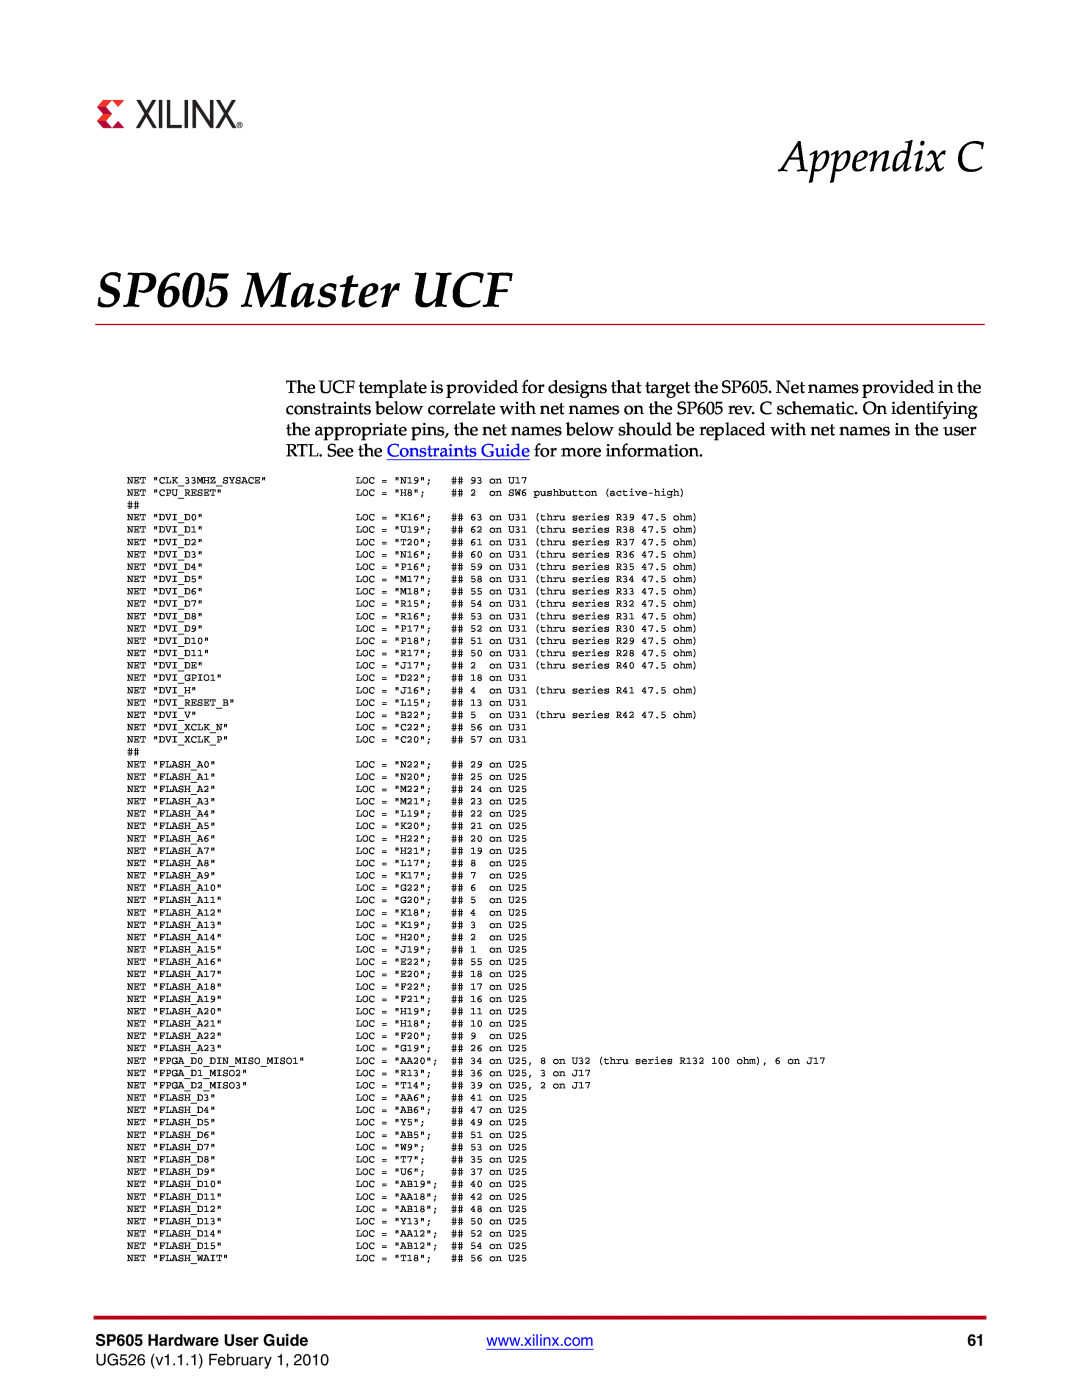 Xilinx manual SP605 Master UCF, Appendix C, UG526 v1.1.1 February 1 